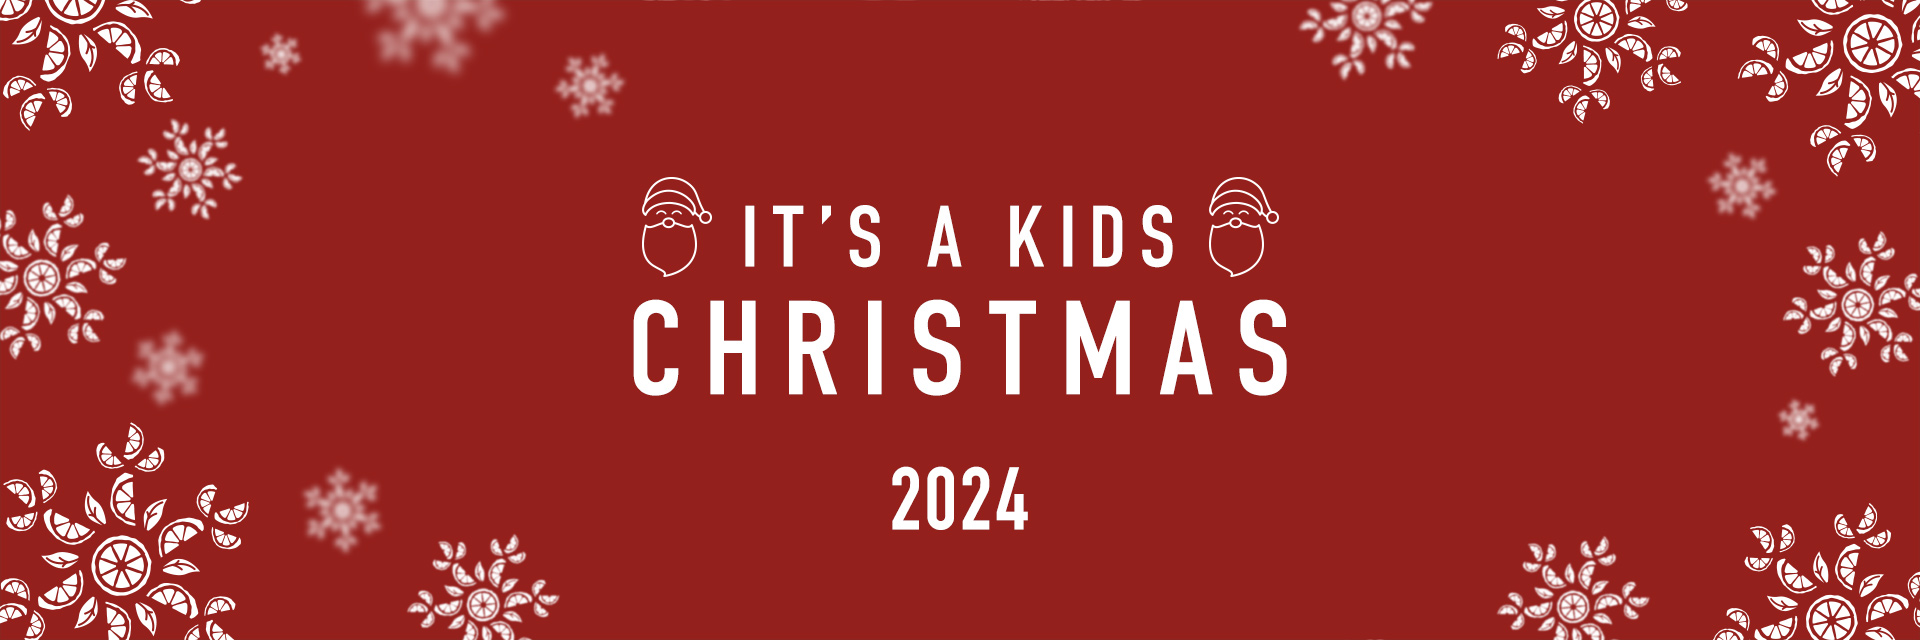 Kids Christmas Menu 2024 at The Ghillies Lair